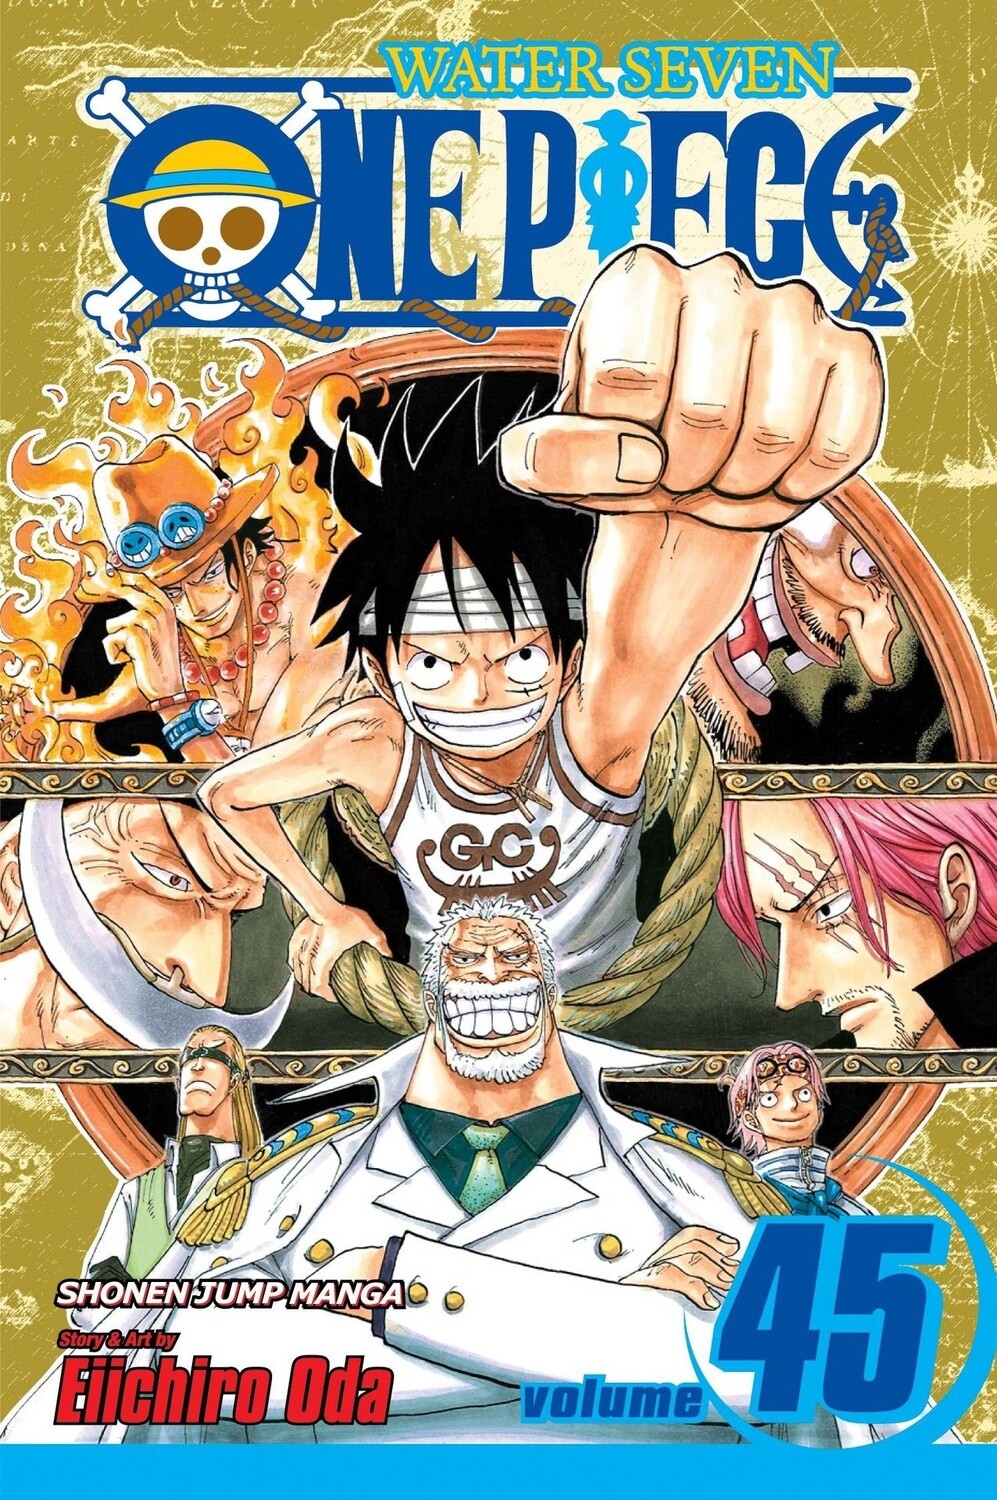 One Piece Vol. 45